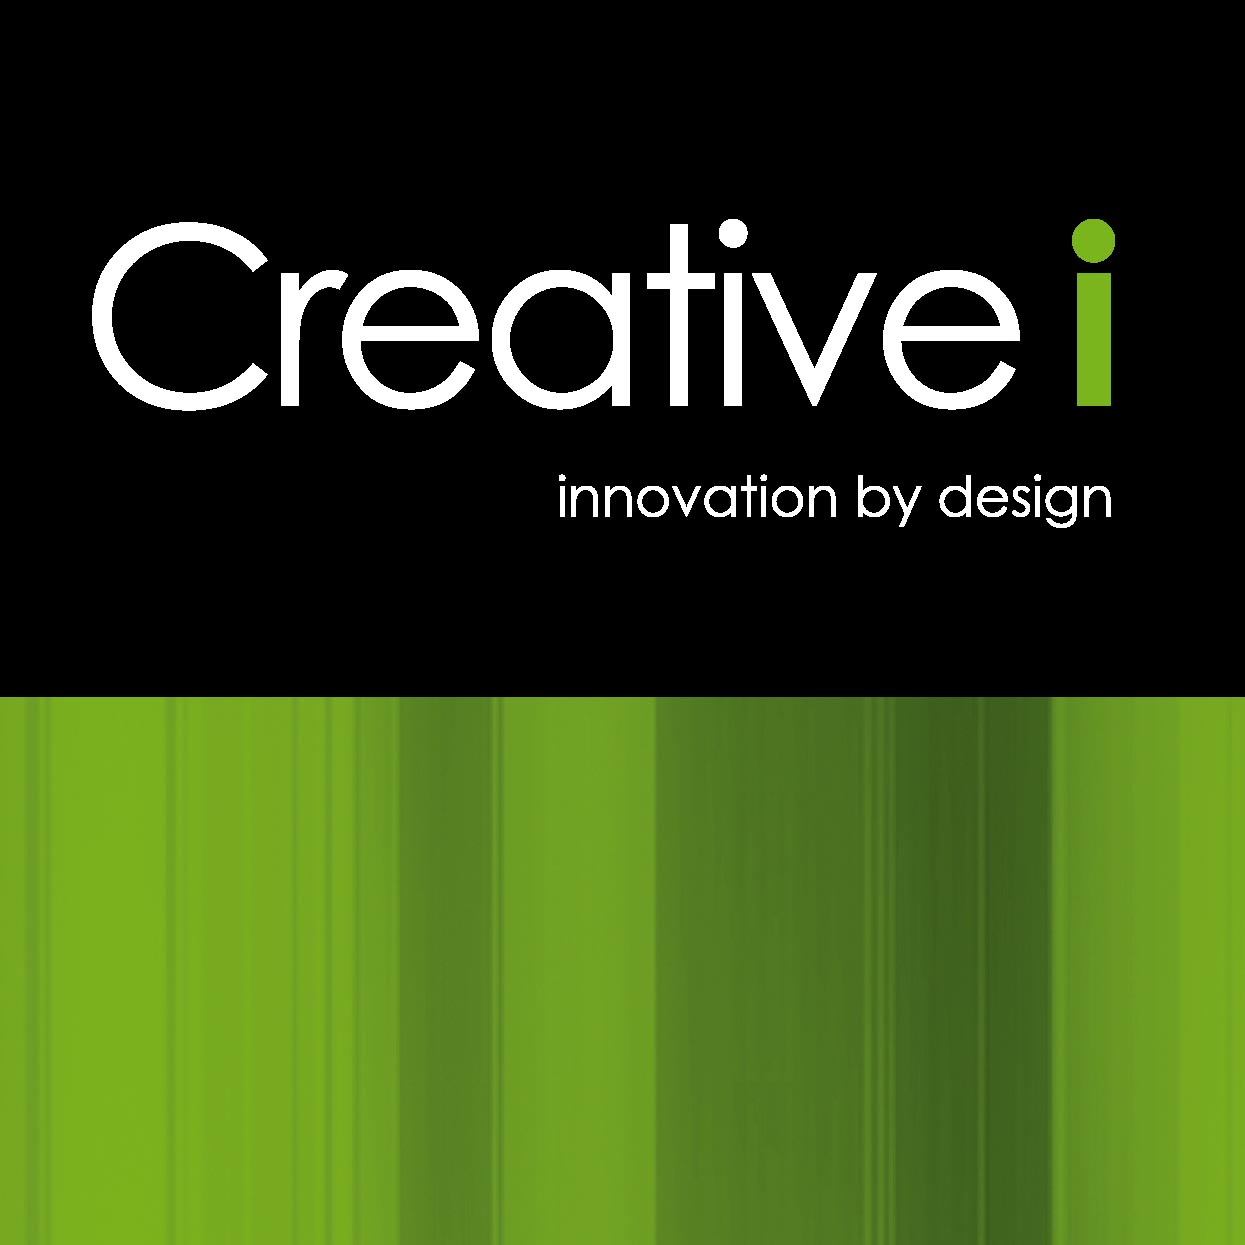 Creative i Design and Print Ltd